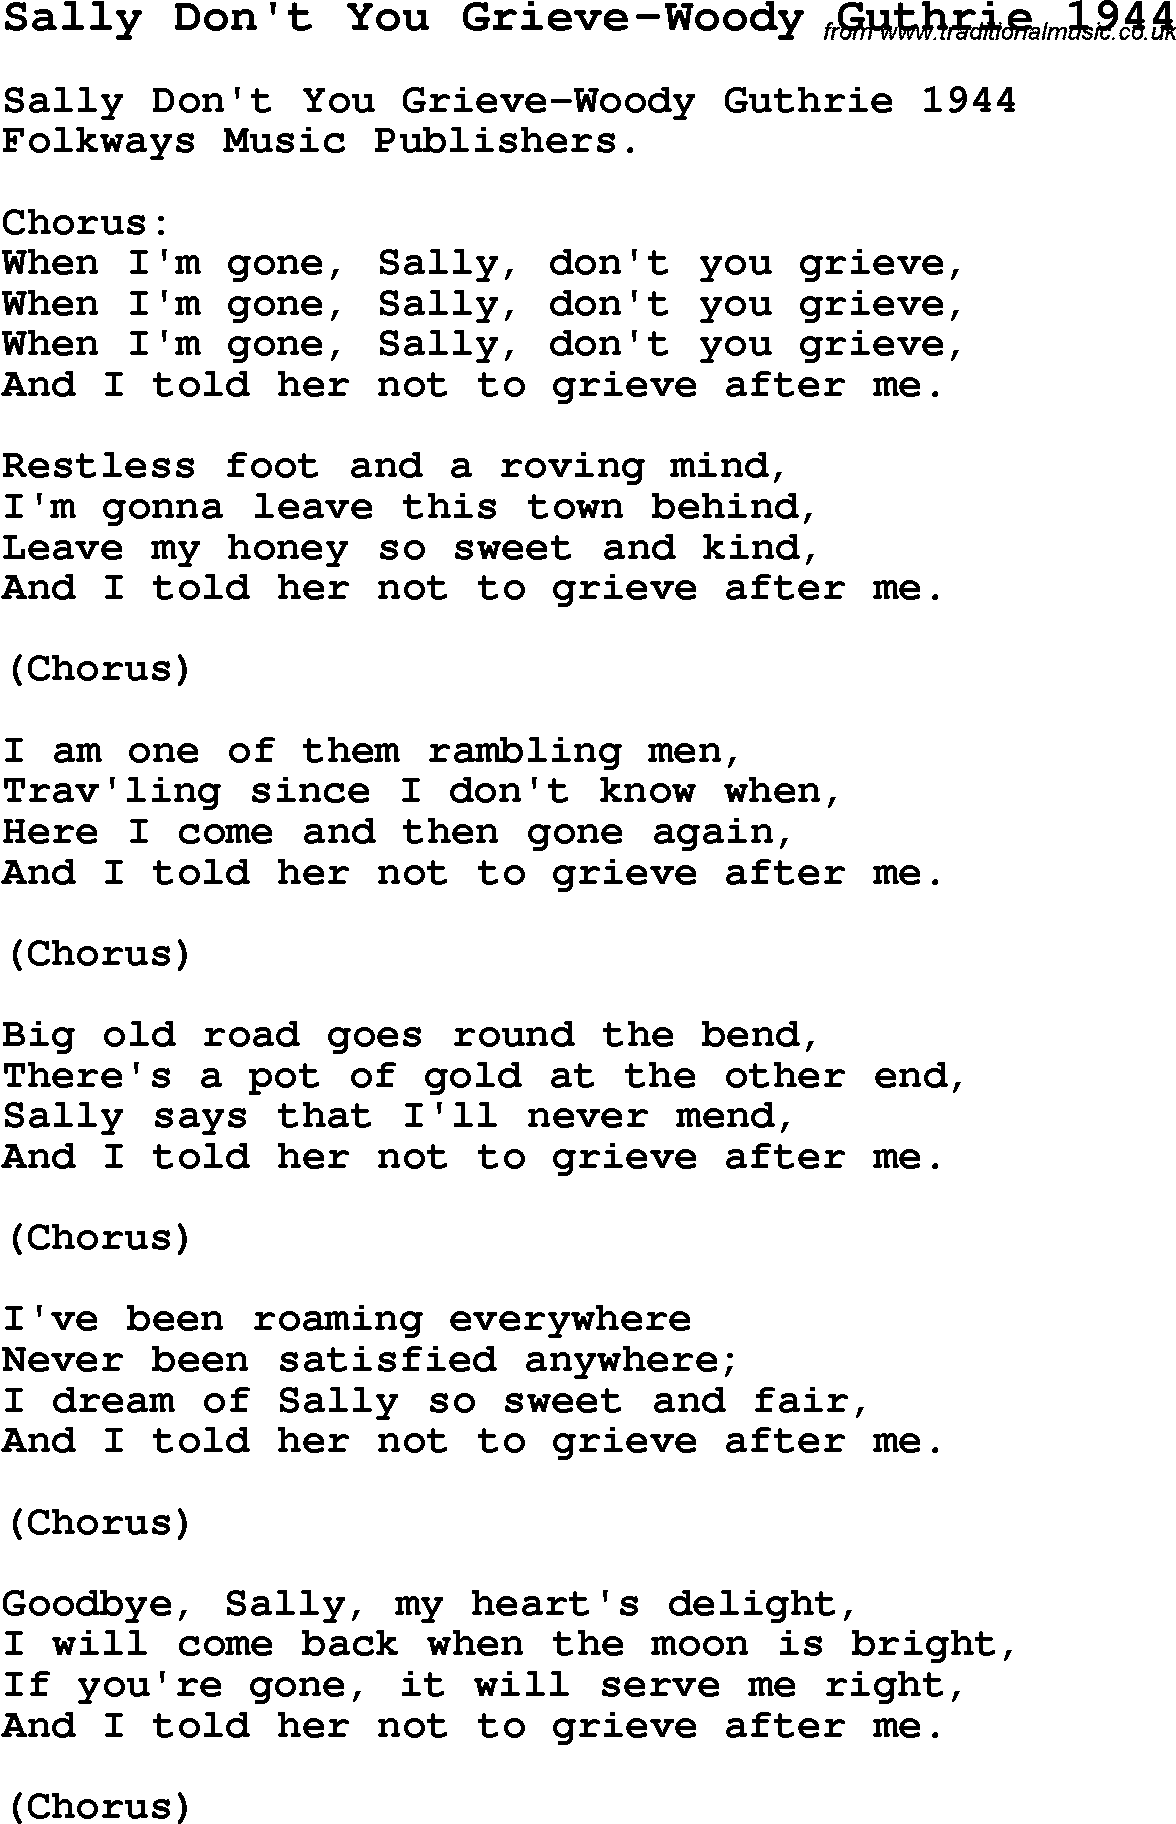 Skiffle Song Lyrics for Sally Don't You Grieve-Woody Guthrie 1944.